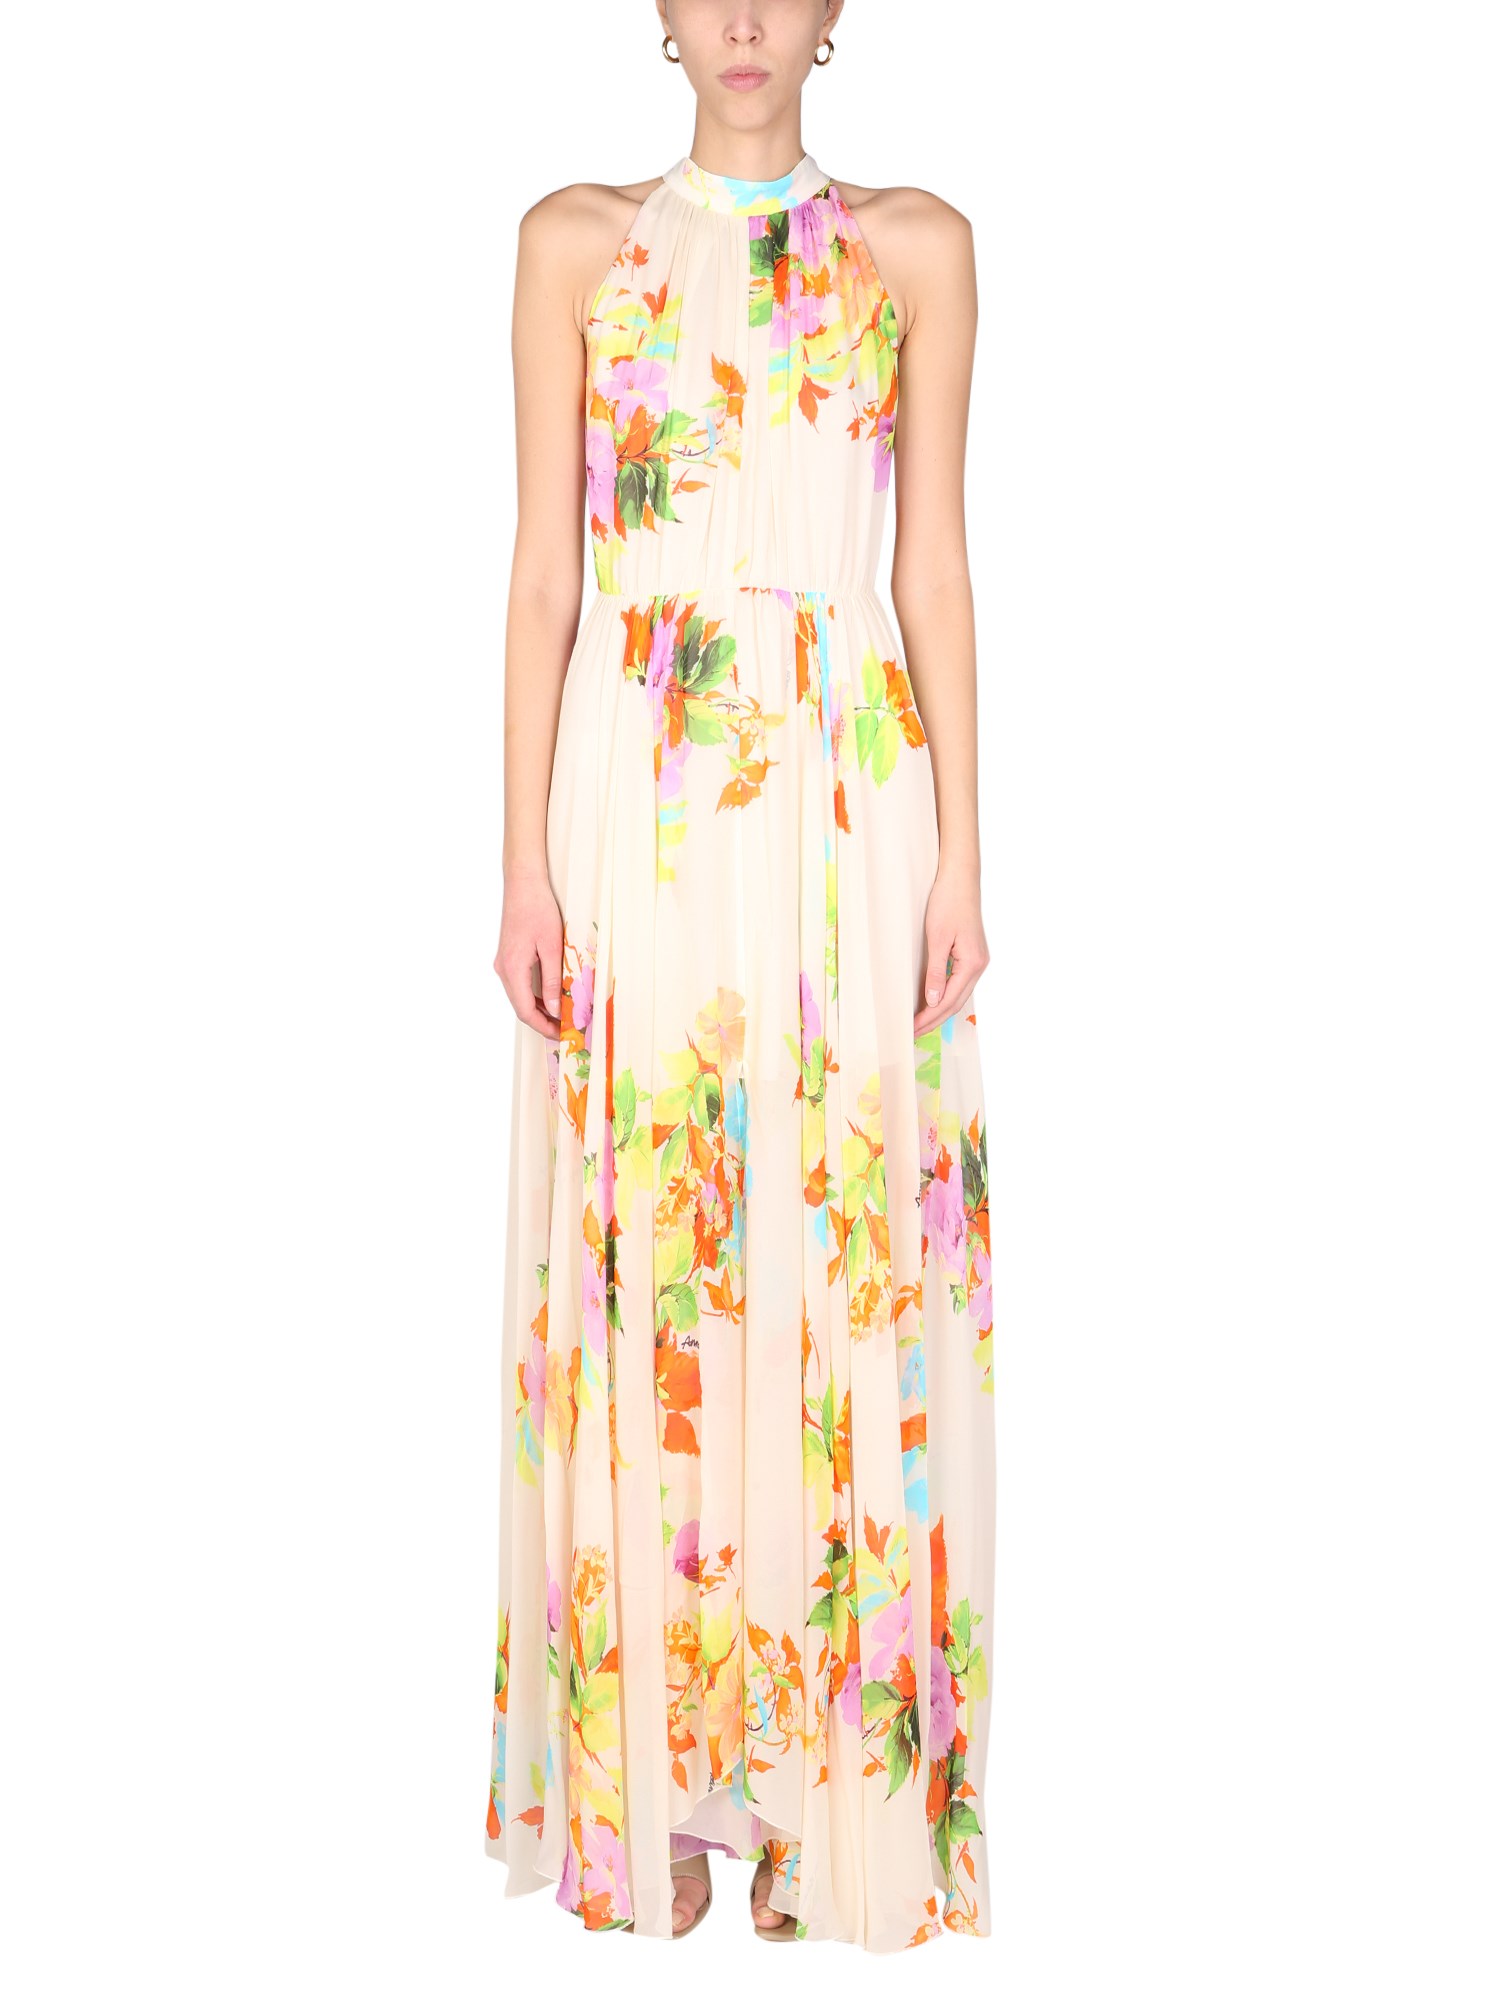 anna molinari dress with floral pattern